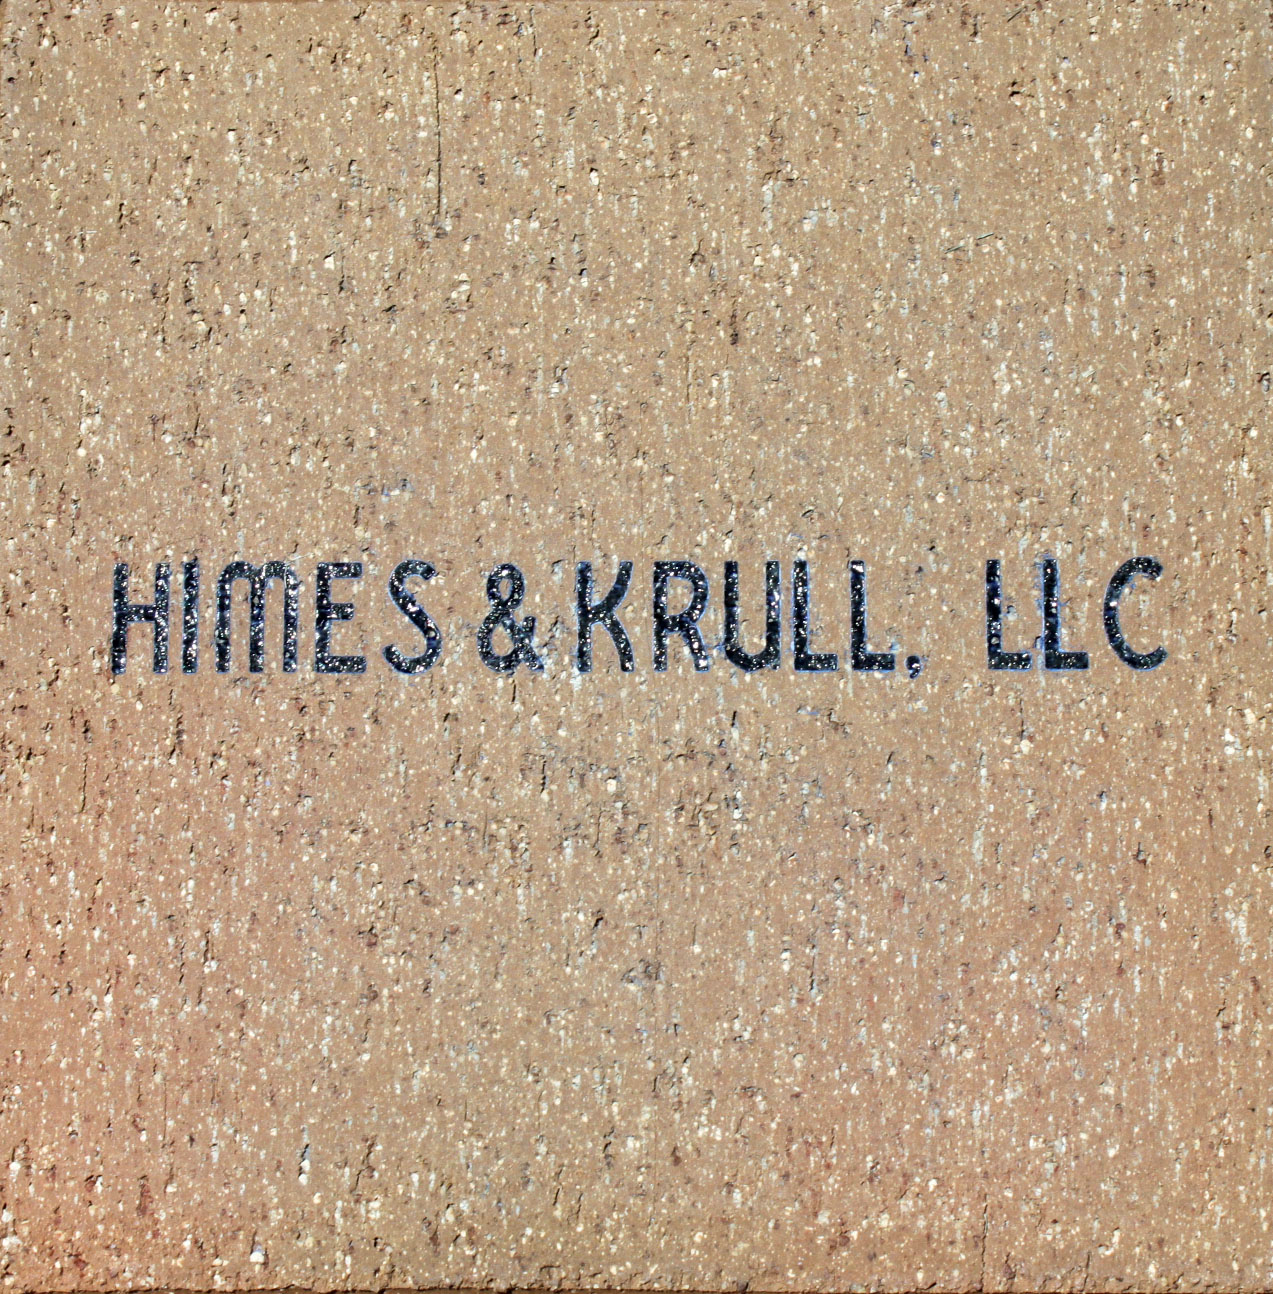 Himes & Krull